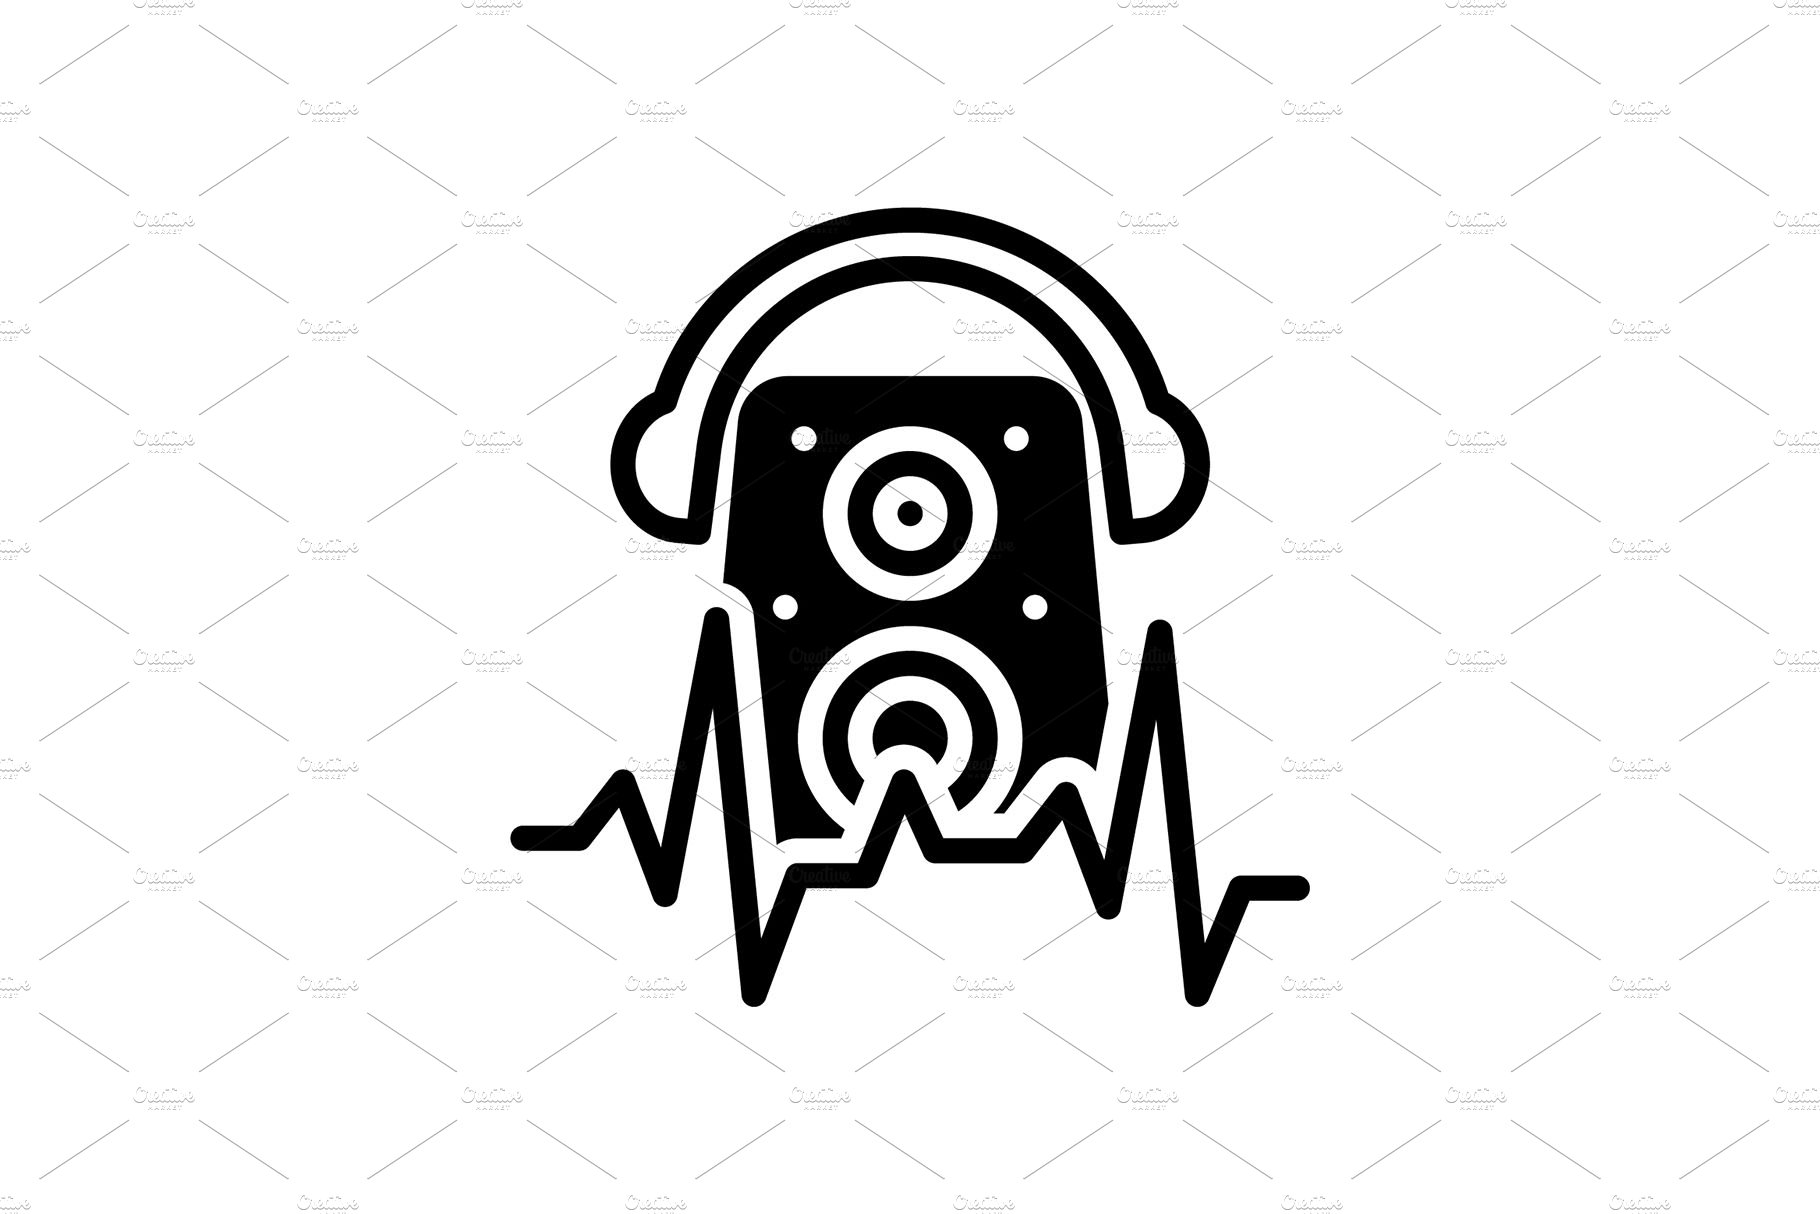 Beat audio icon cover image.